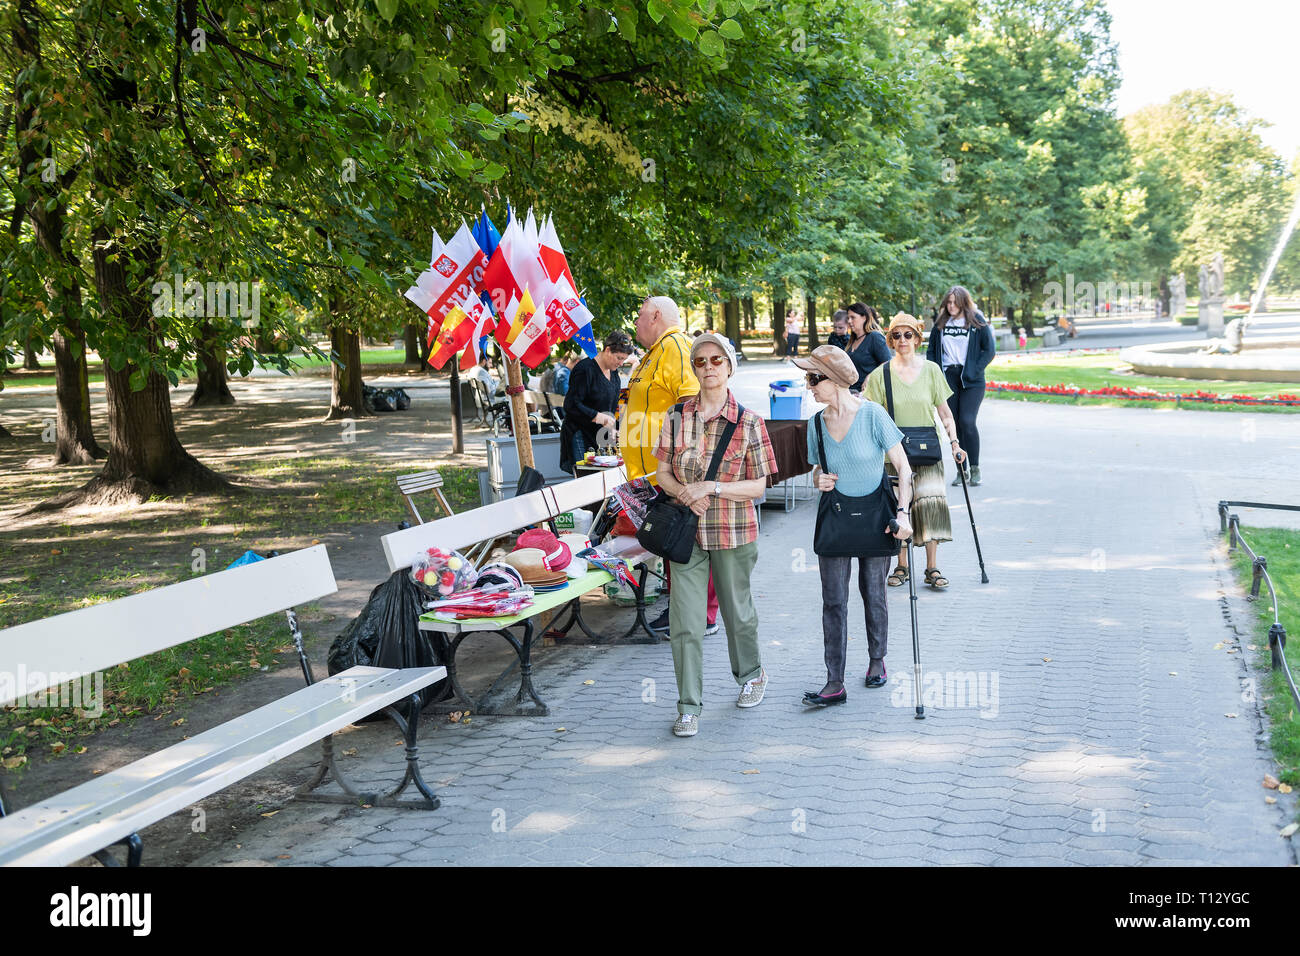 Warsaw, Poland - August 23, 2018: People local woman vendor selling souvenirs Polish EU European Union flags on bench in summer Saxon Gardens Park Stock Photo